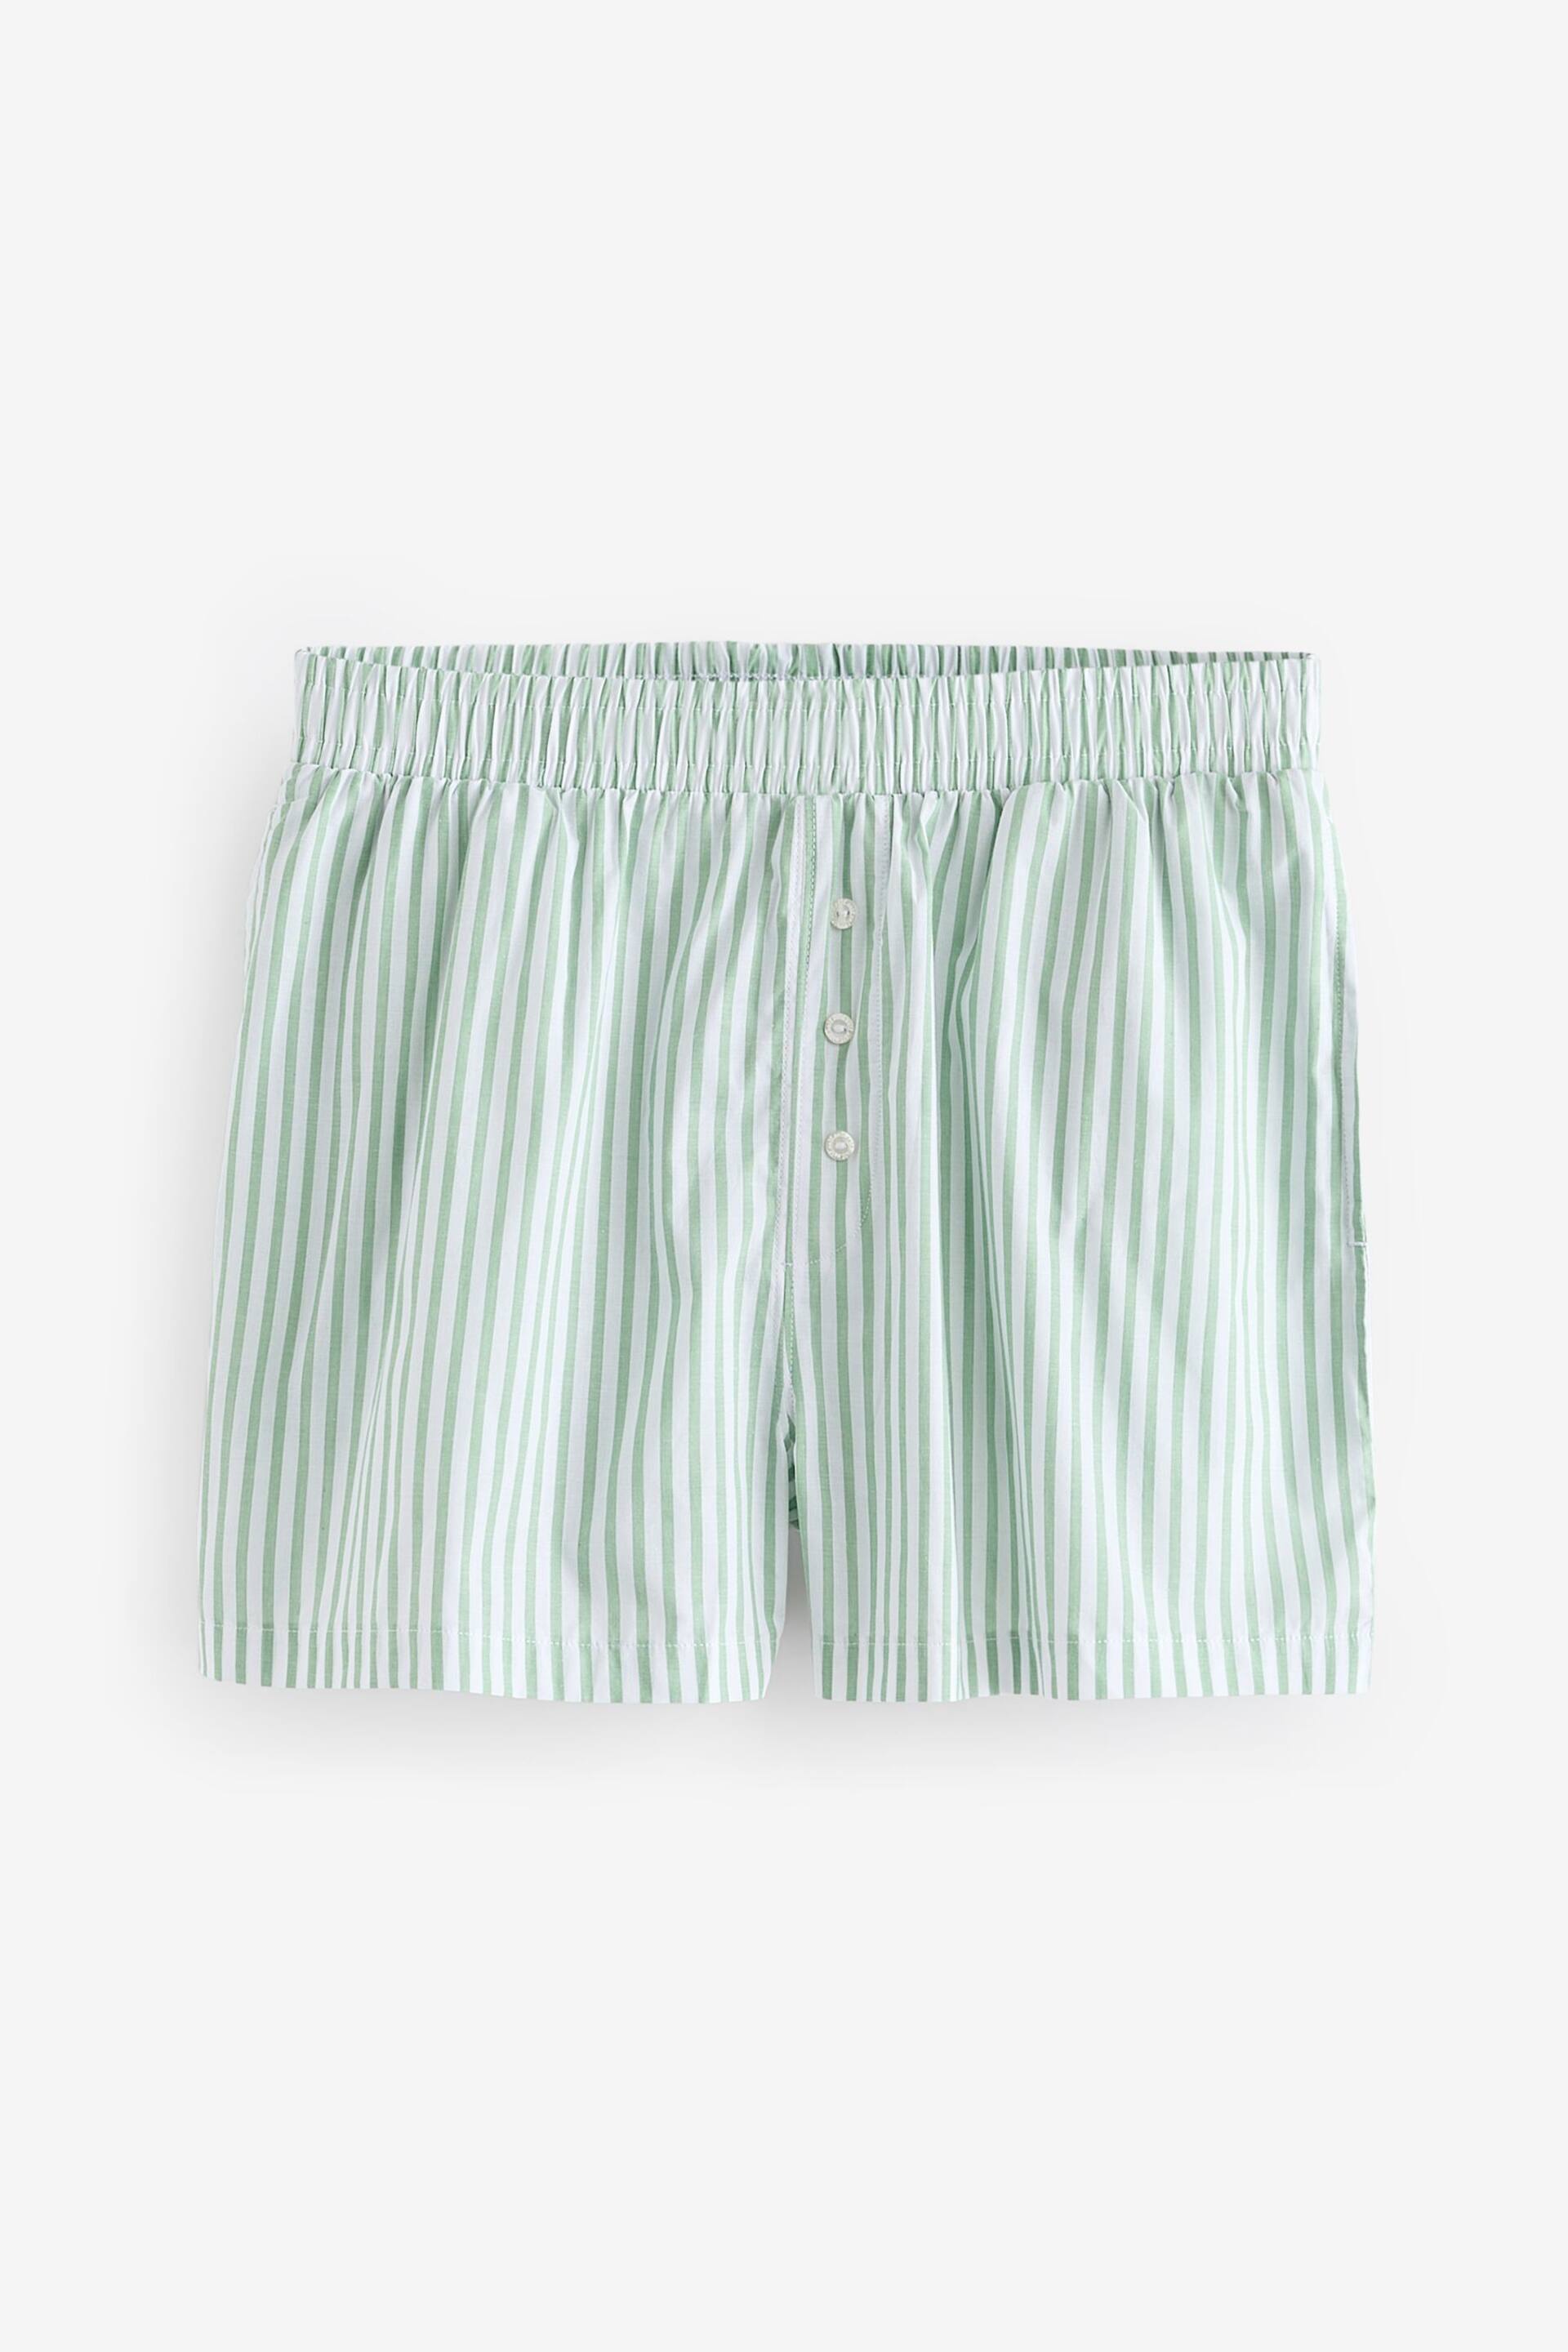 self. Green Rib Vest Short Pyjamas Set - Image 9 of 11